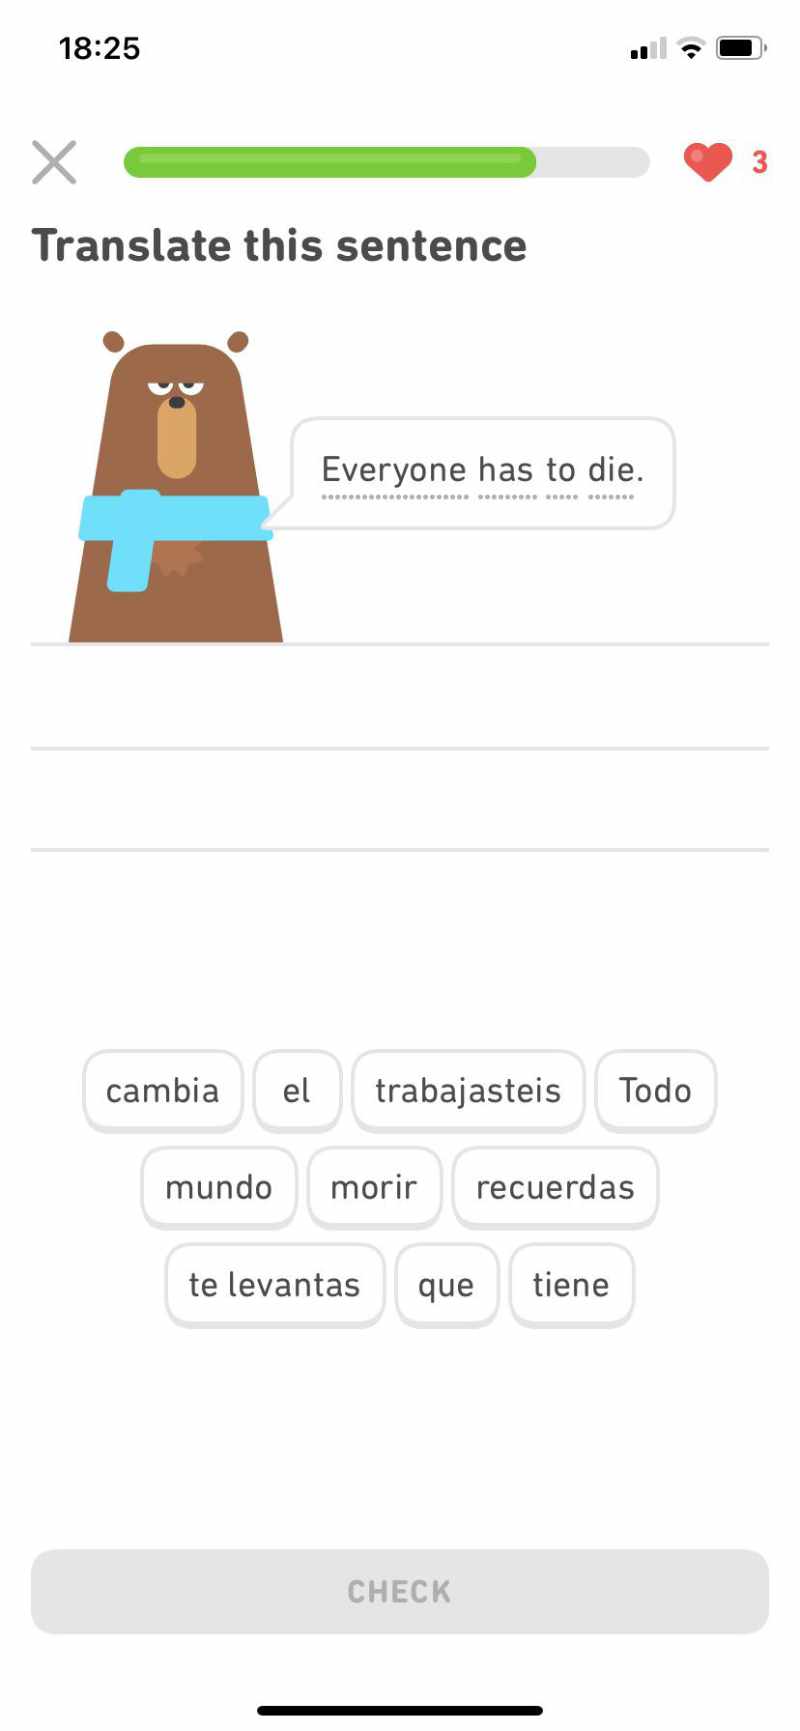 OK Duolingo!